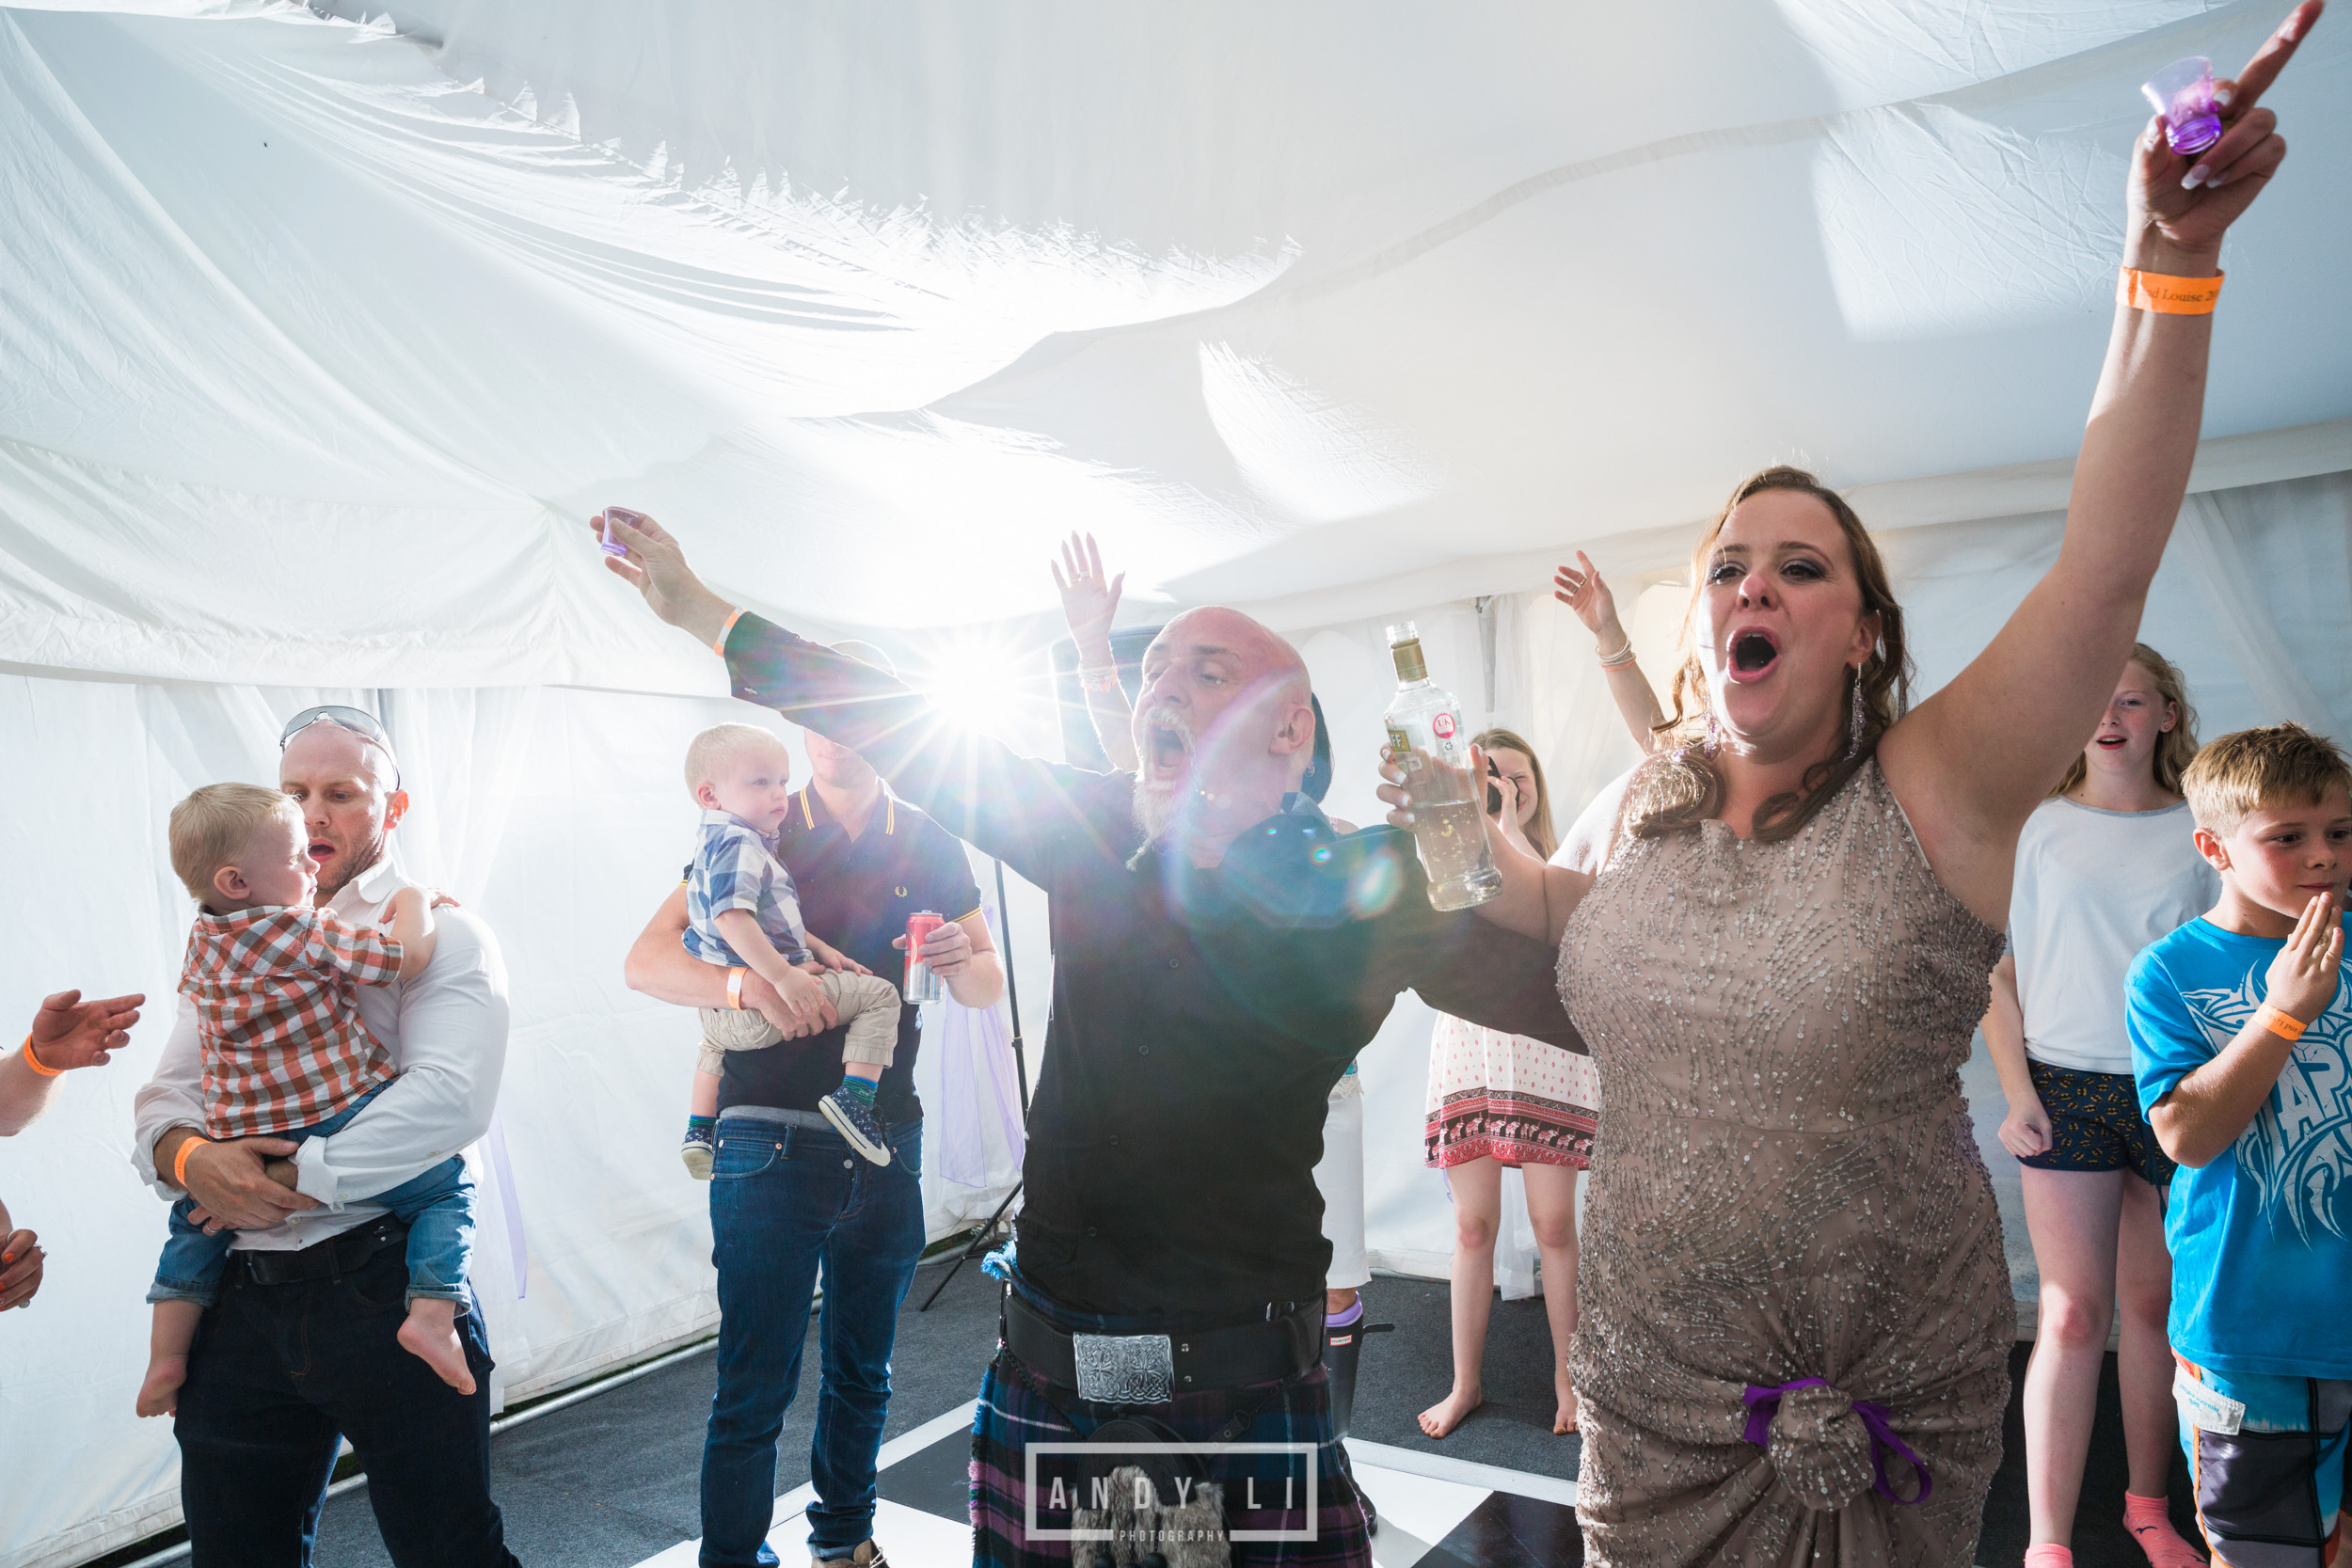 Festival Wedding Shropshire-Andy Li Photography-469.jpg